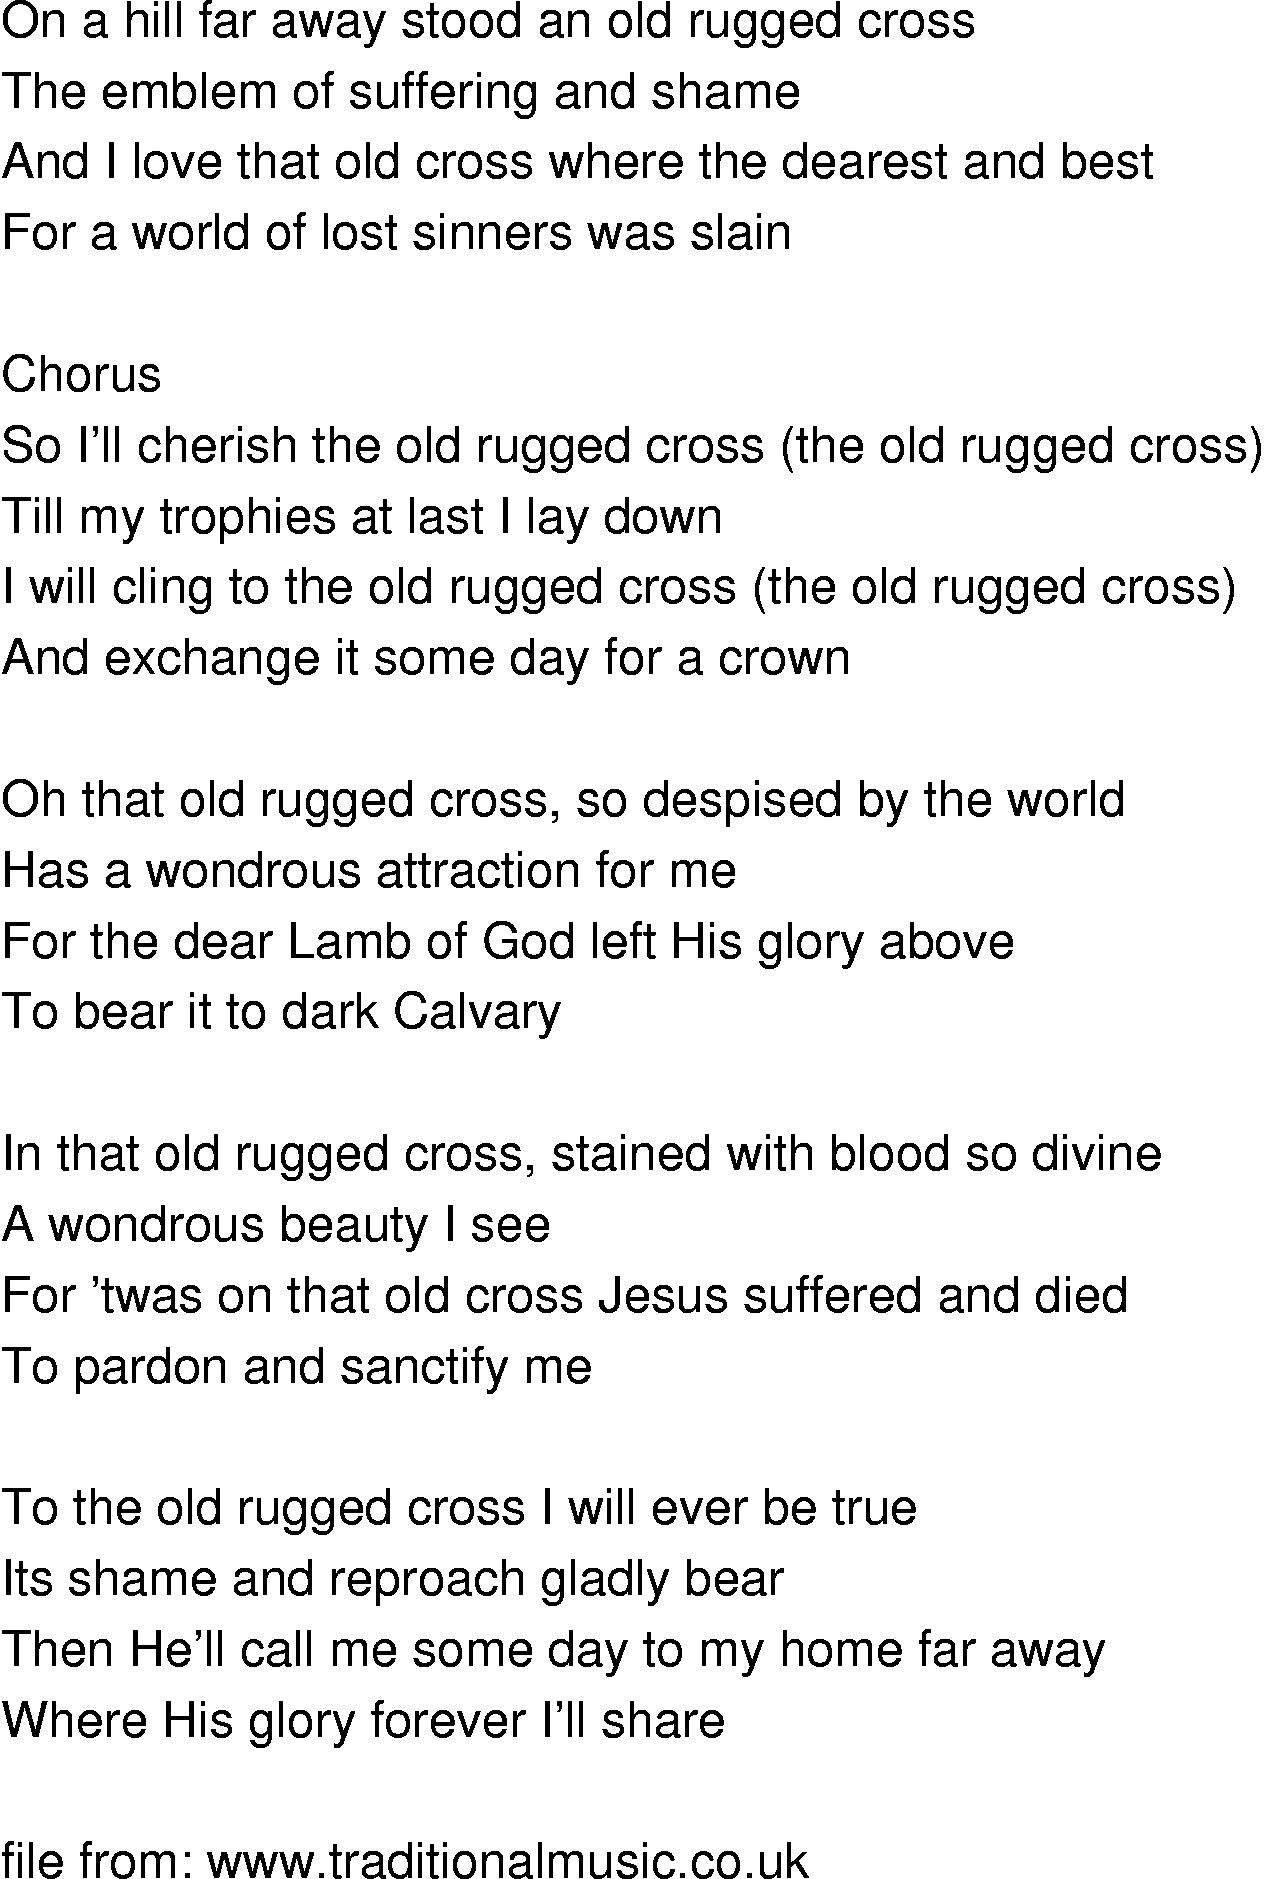 OldTime Song Lyrics Old Rugged Cross